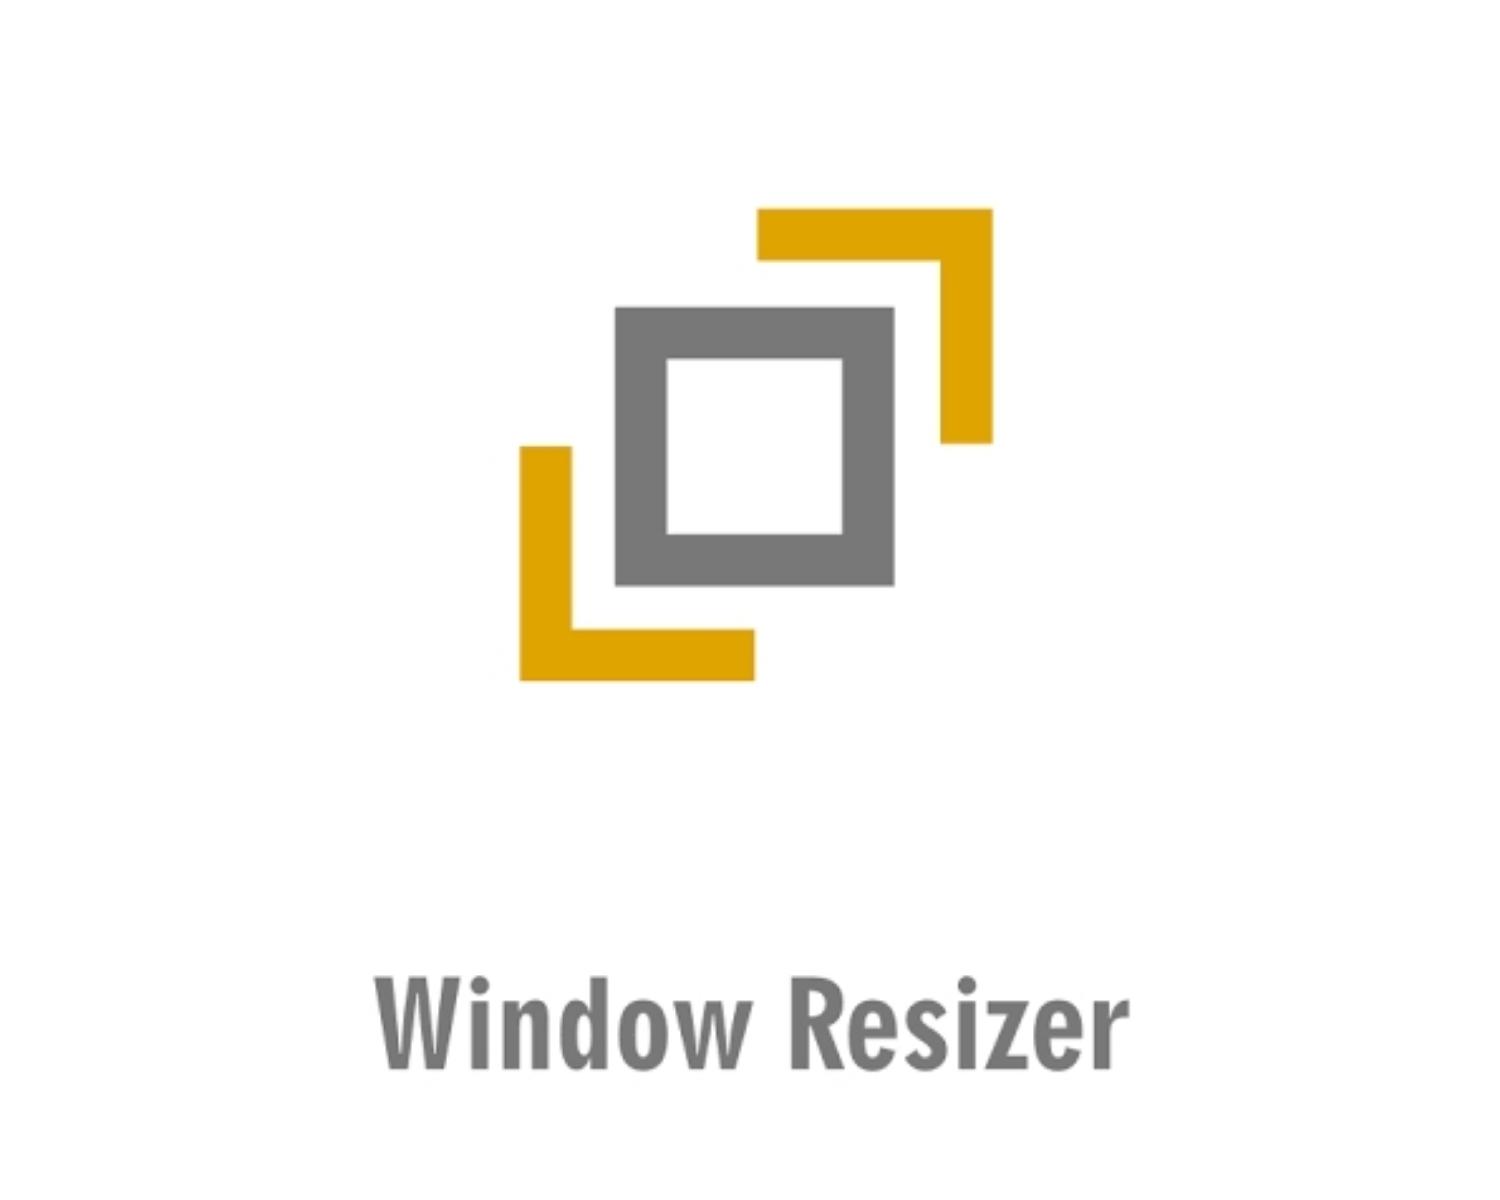 Extension 3: WindowResizer